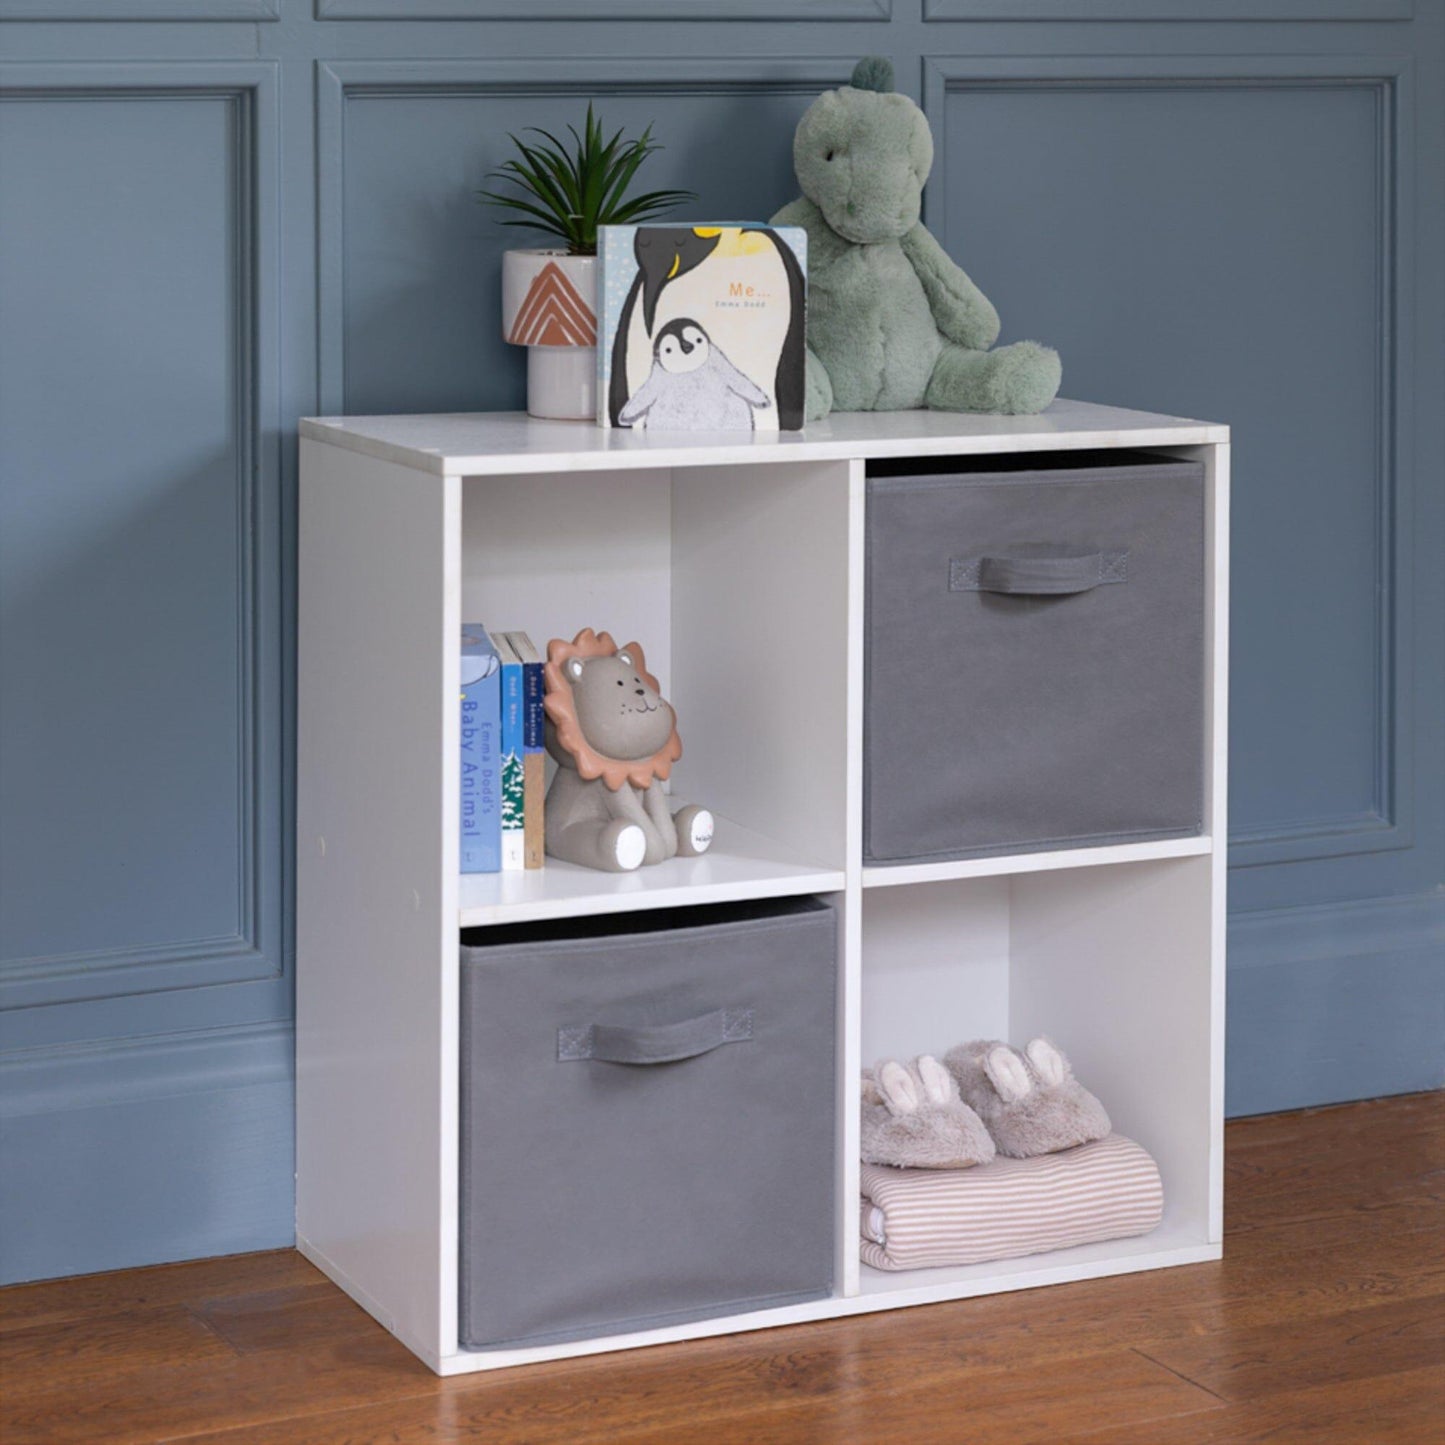 4 Cube White Bookcase Wooden Display Unit Shelving Storage Bookshelf Shelves (Grey Basket) - Laura James